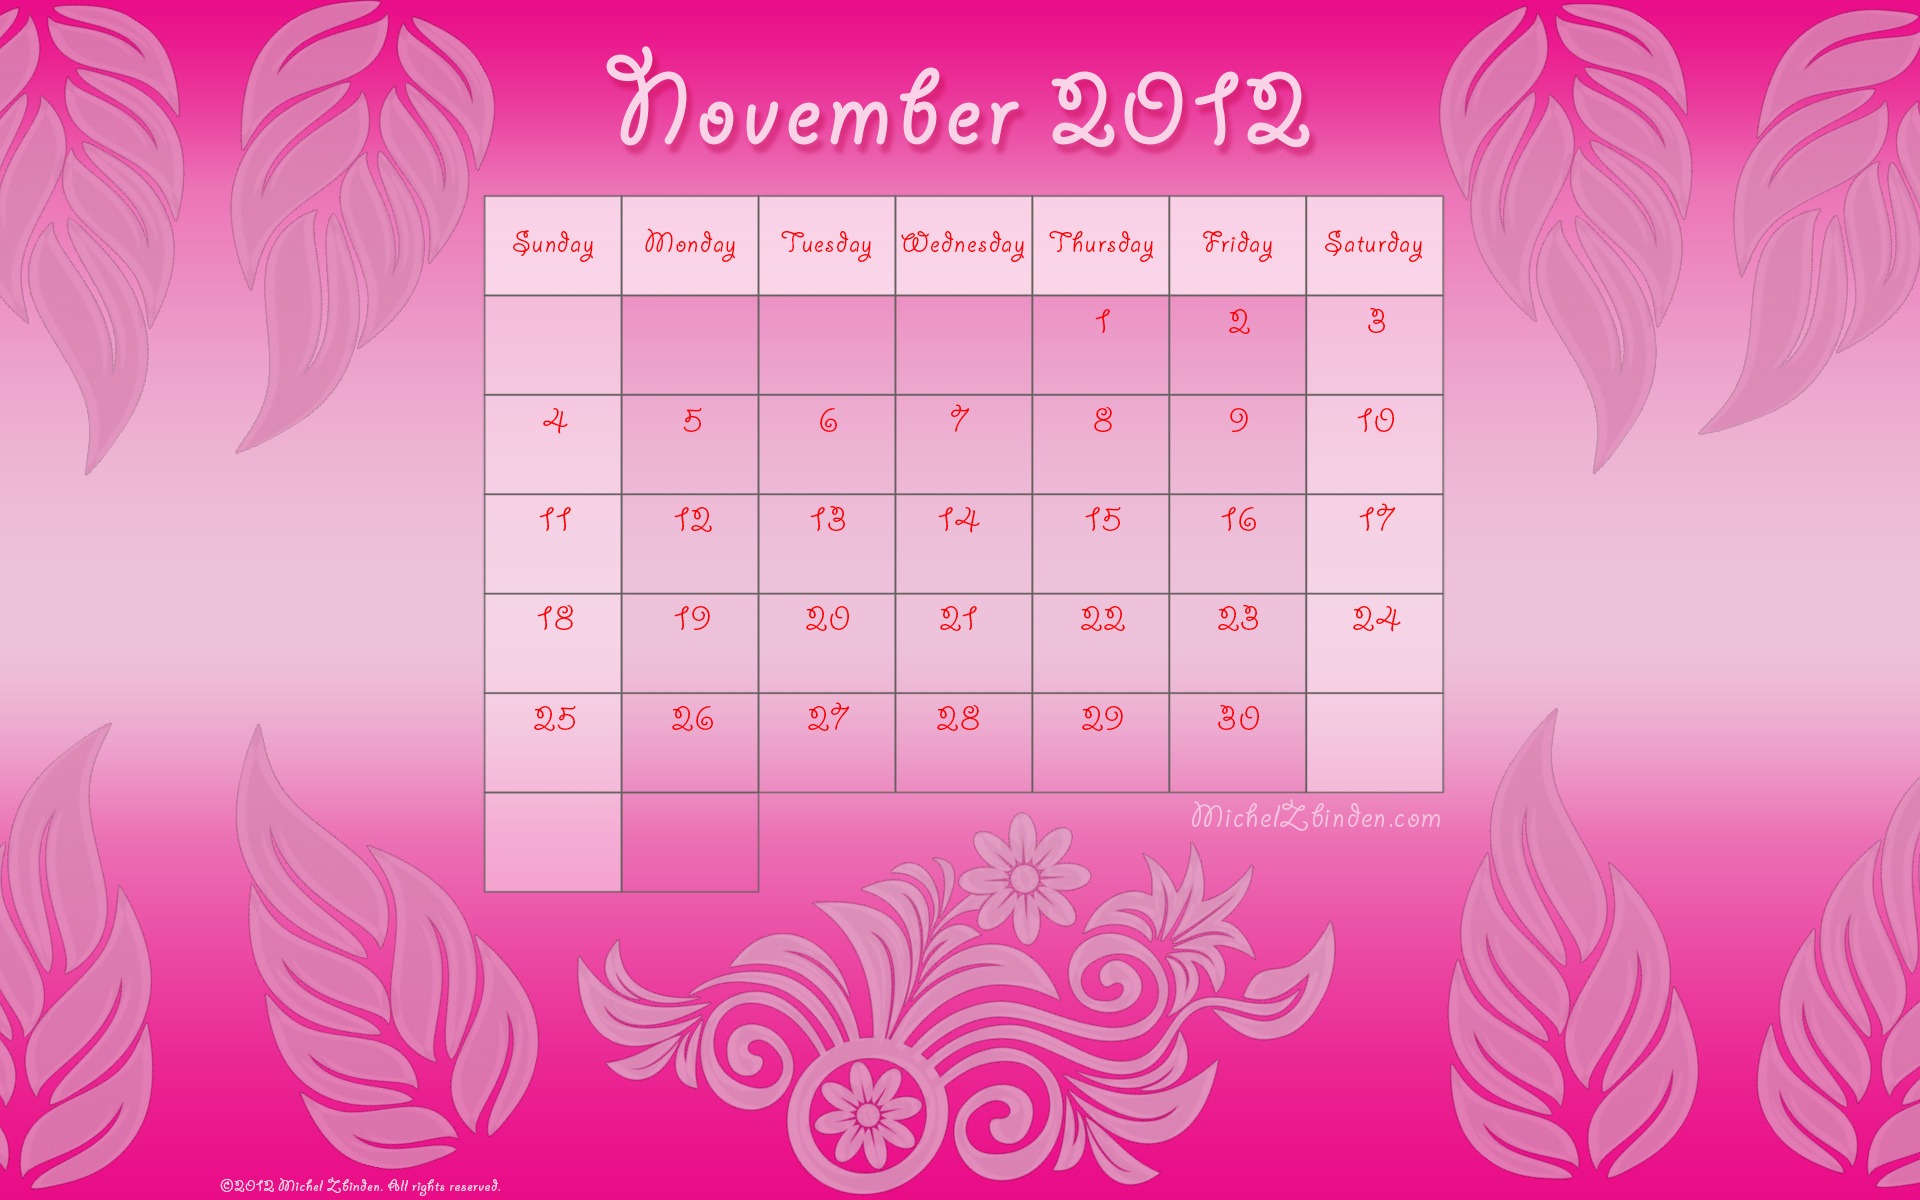 November 2012 Calendar wallpaper (1) #3 - 1920x1200